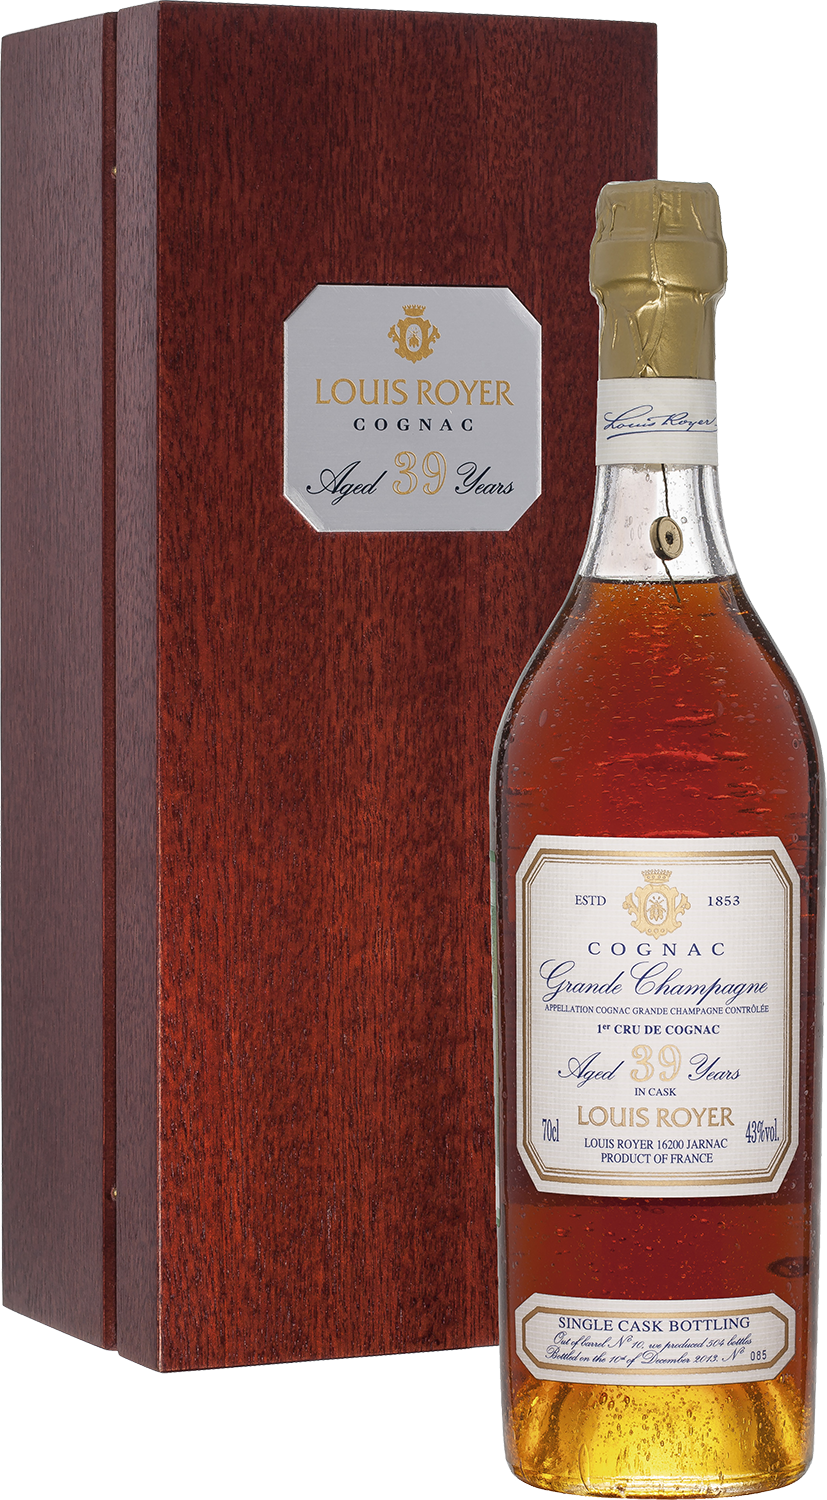 Cognac Louis Royer 39 years Grande Champagne (gift box) roullet cognac vs grande champagne gift box